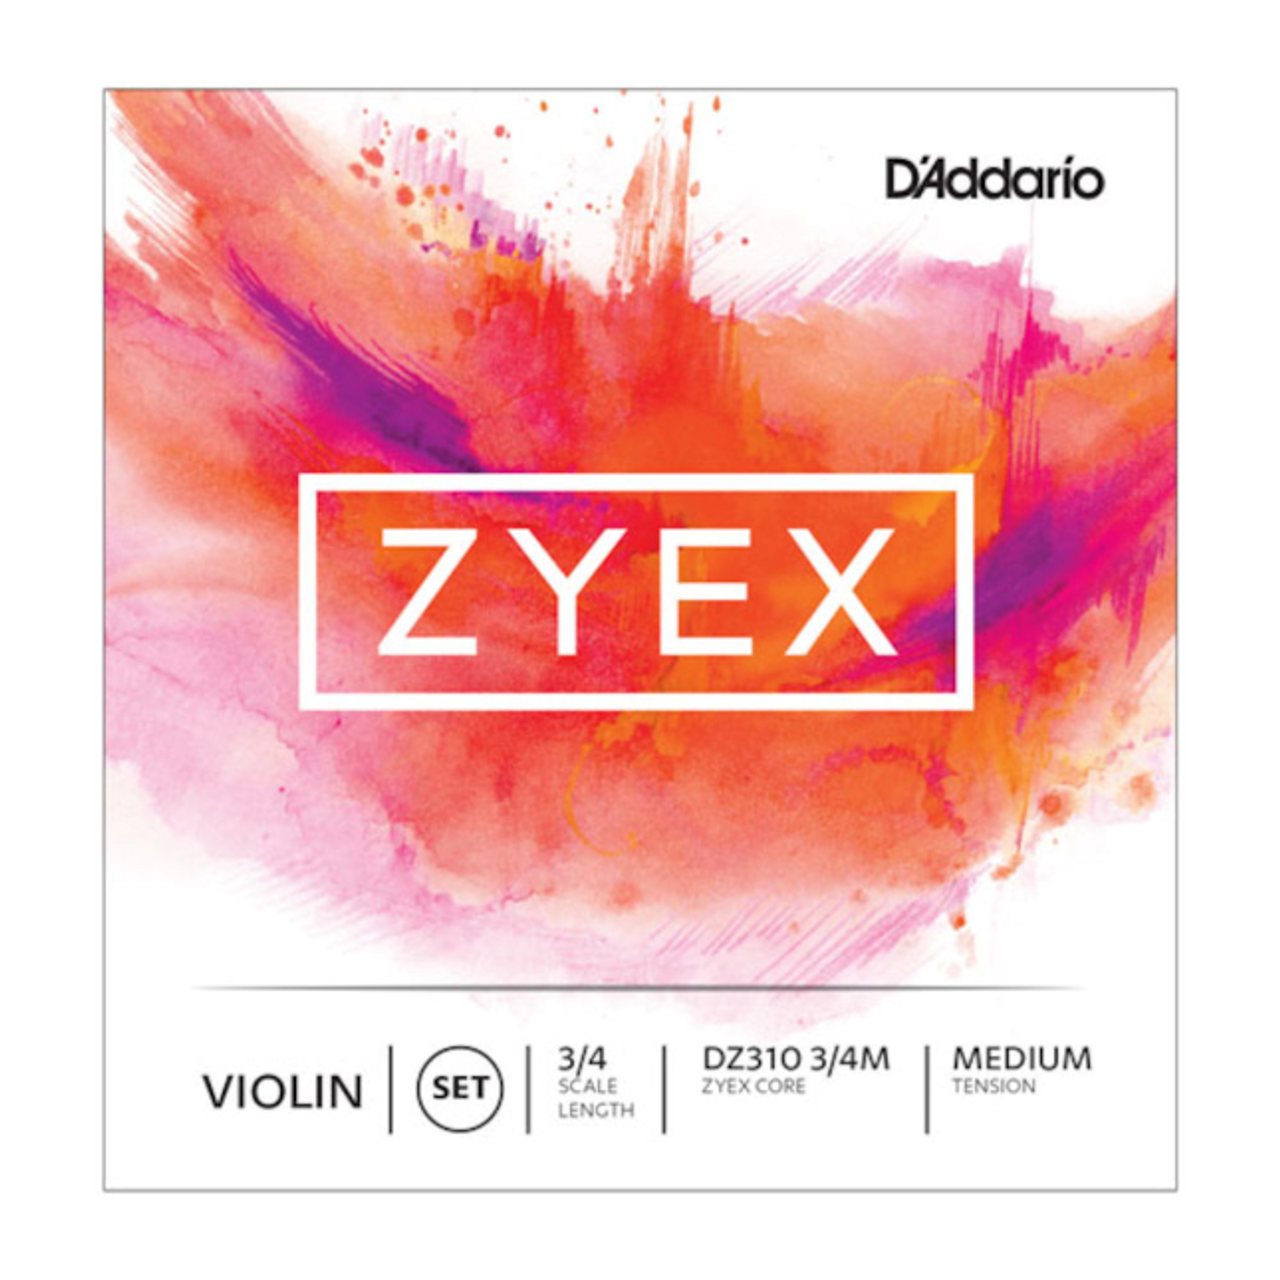 Zyex Violin String Set, 3/4 Scale, Medium Tension